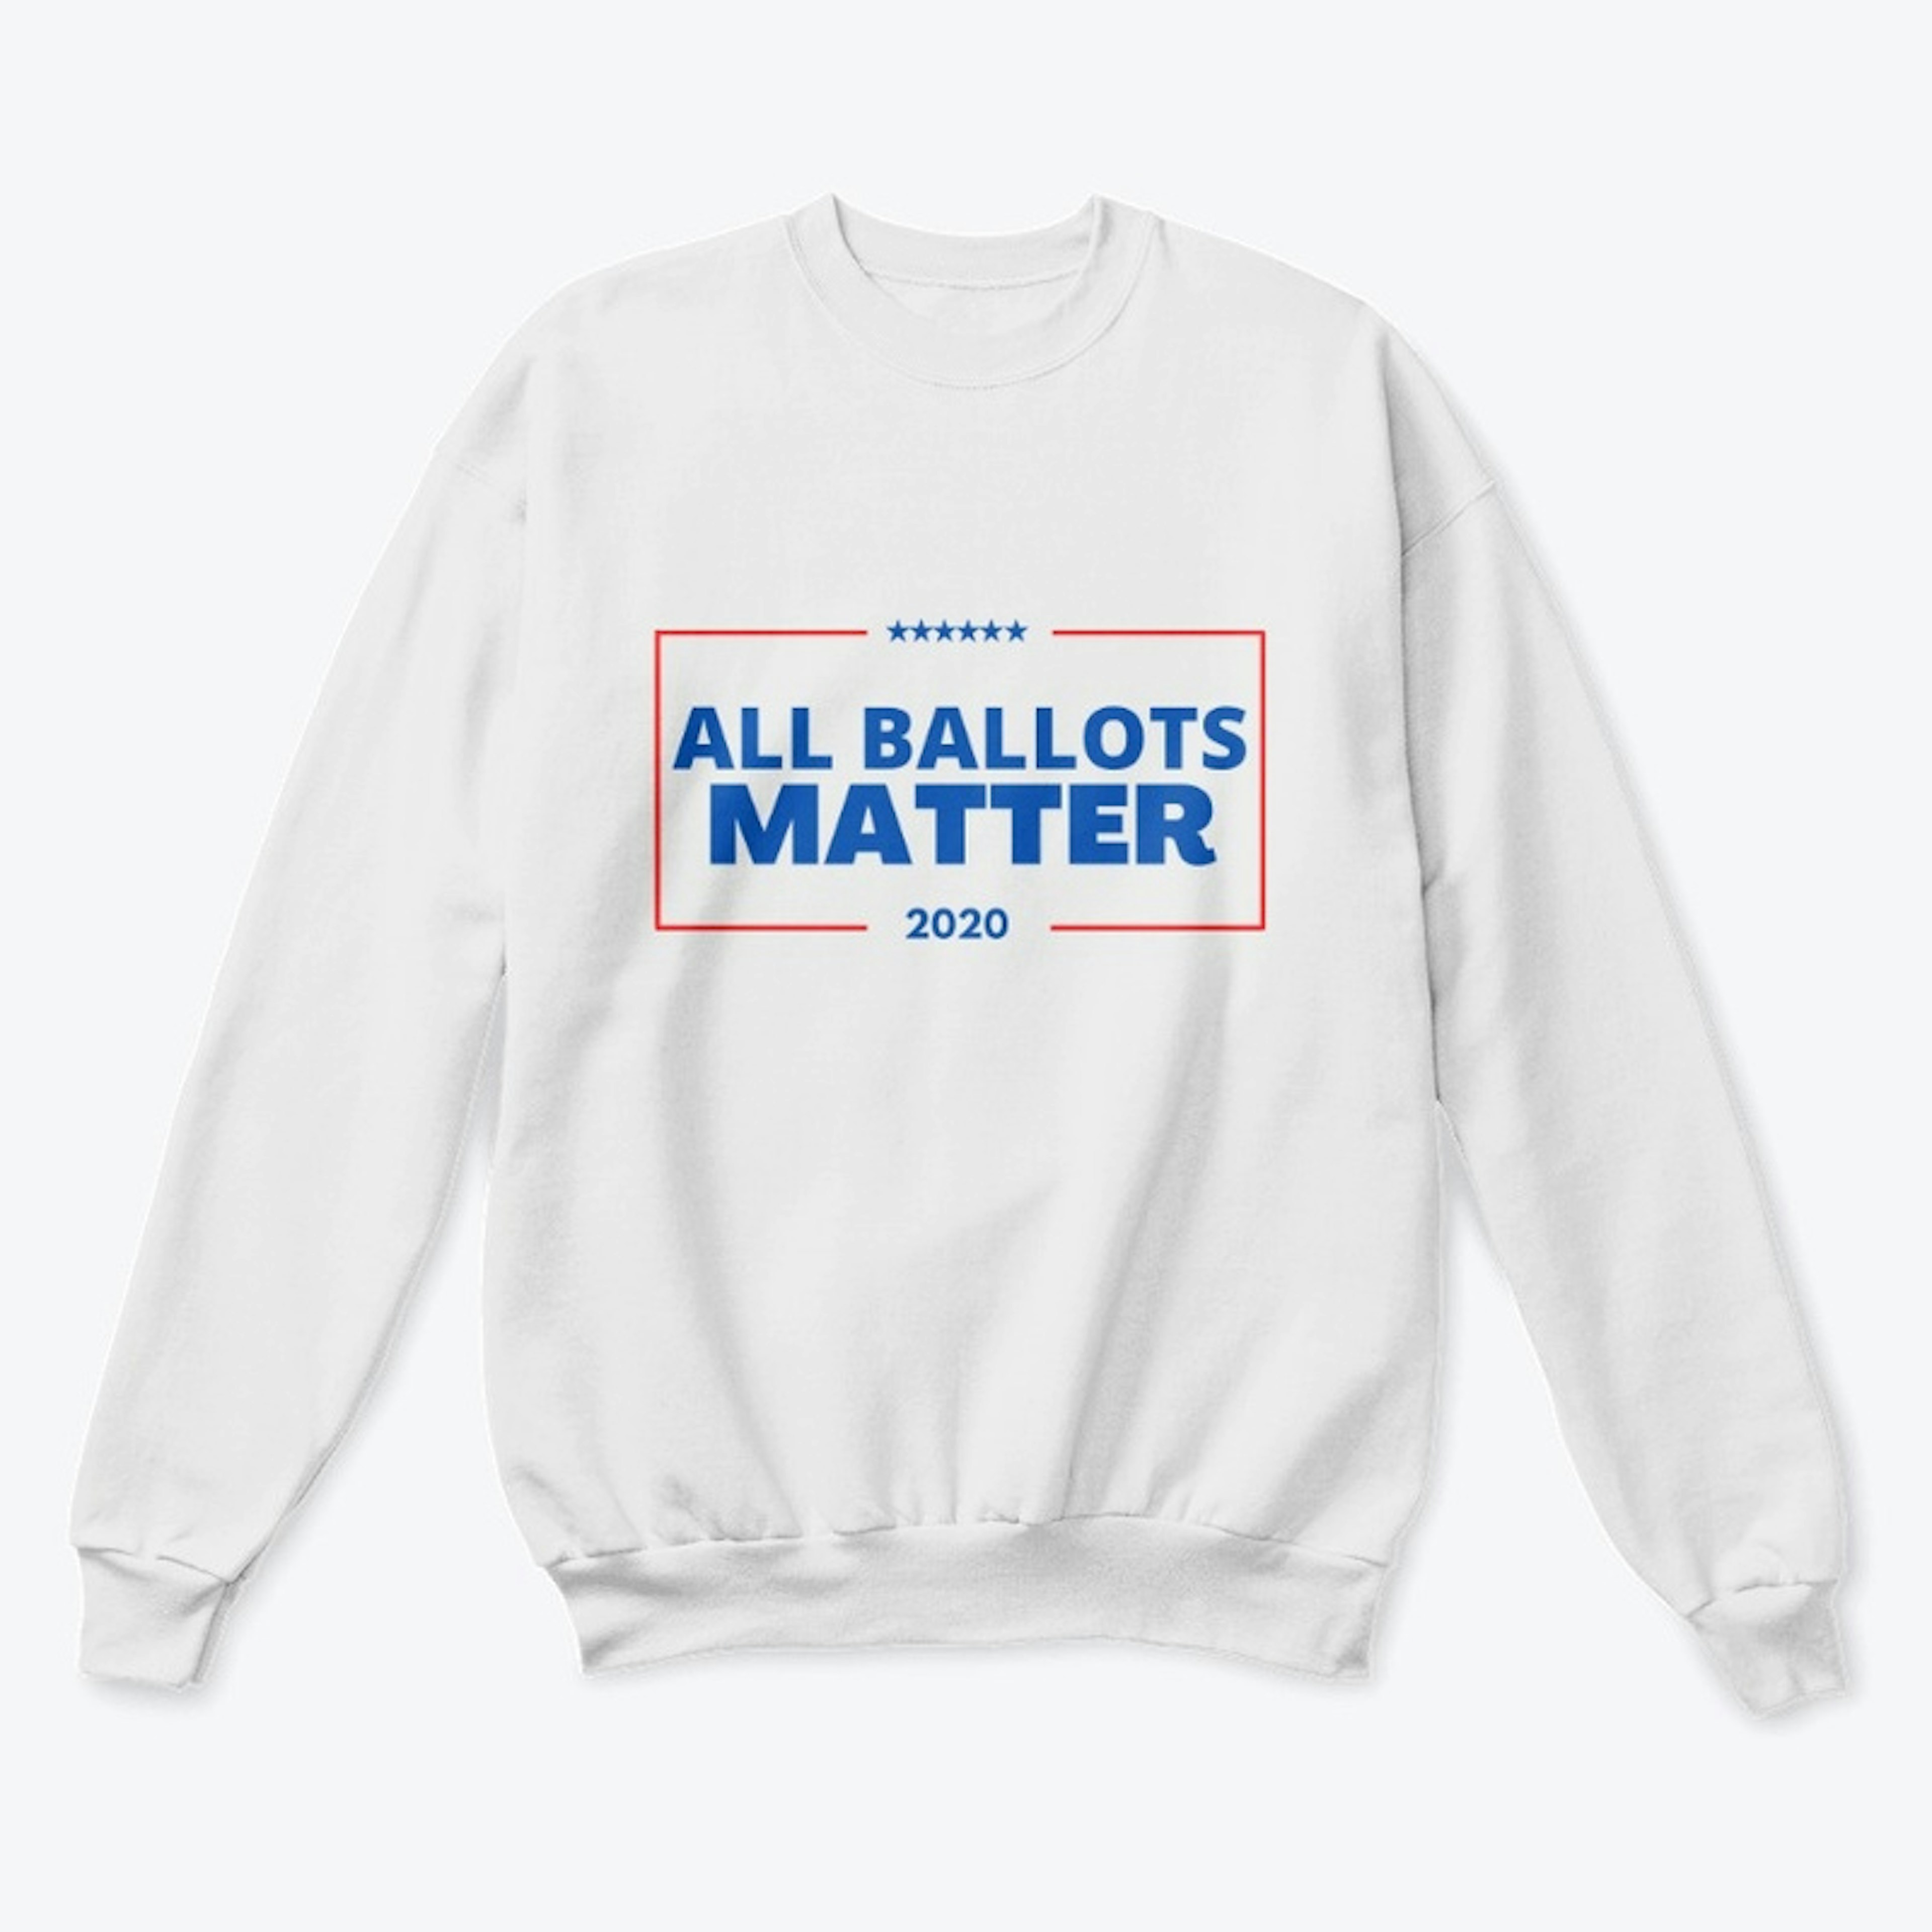 All Ballots Matter (White)